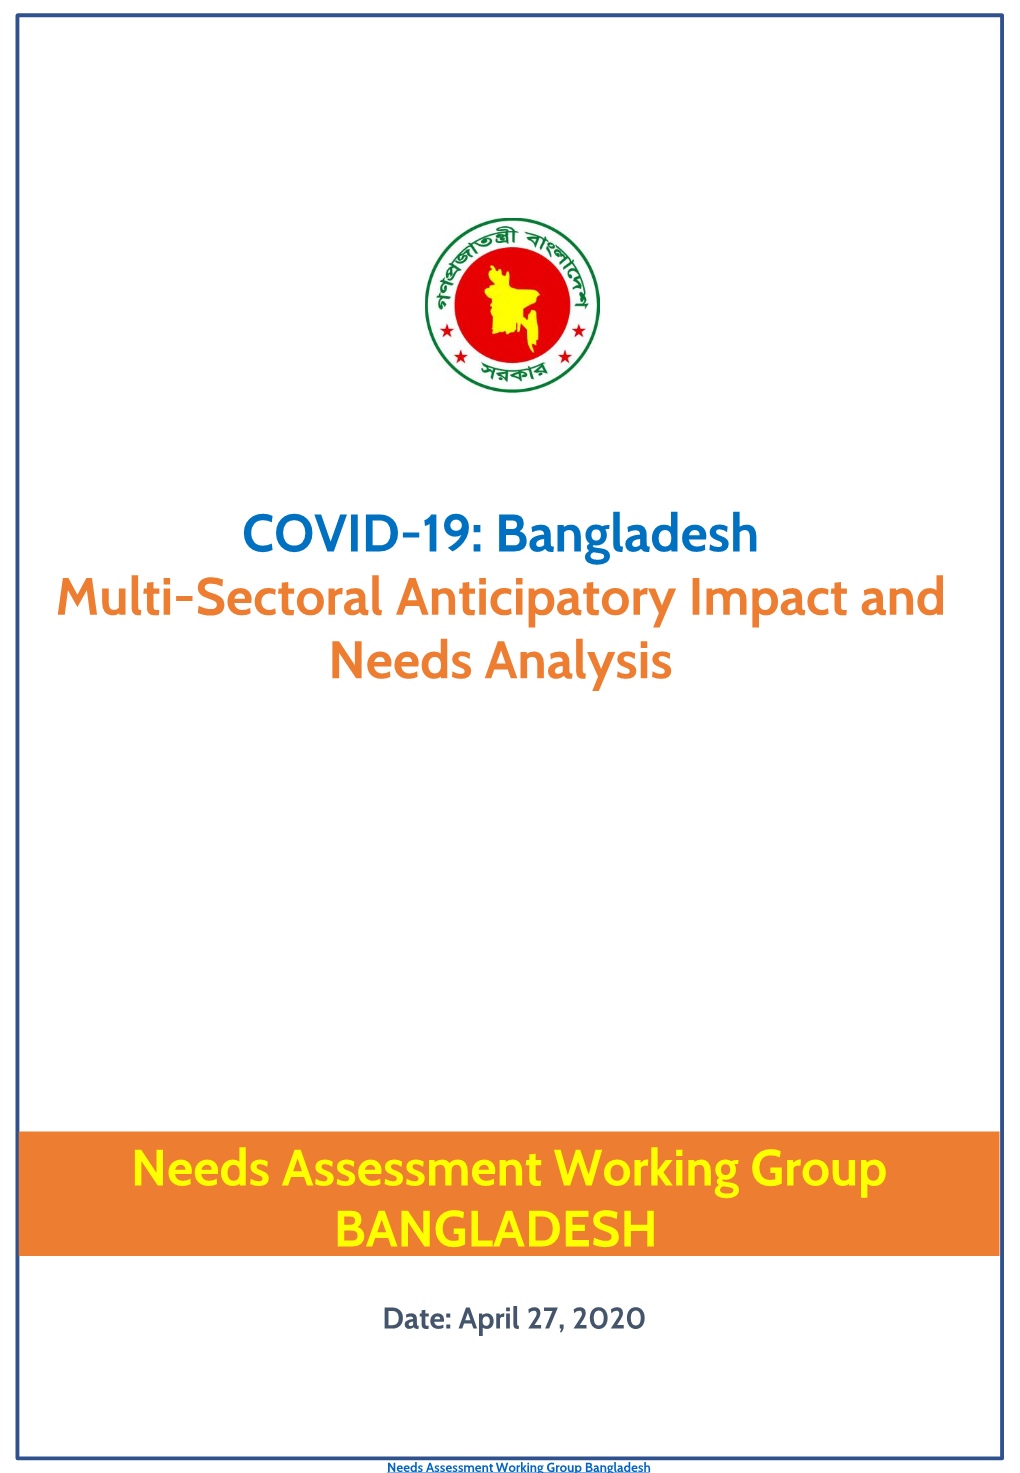 COVID-19: Bangladesh Multi-Sectoral Anticipatory Impact and Needs Analysis